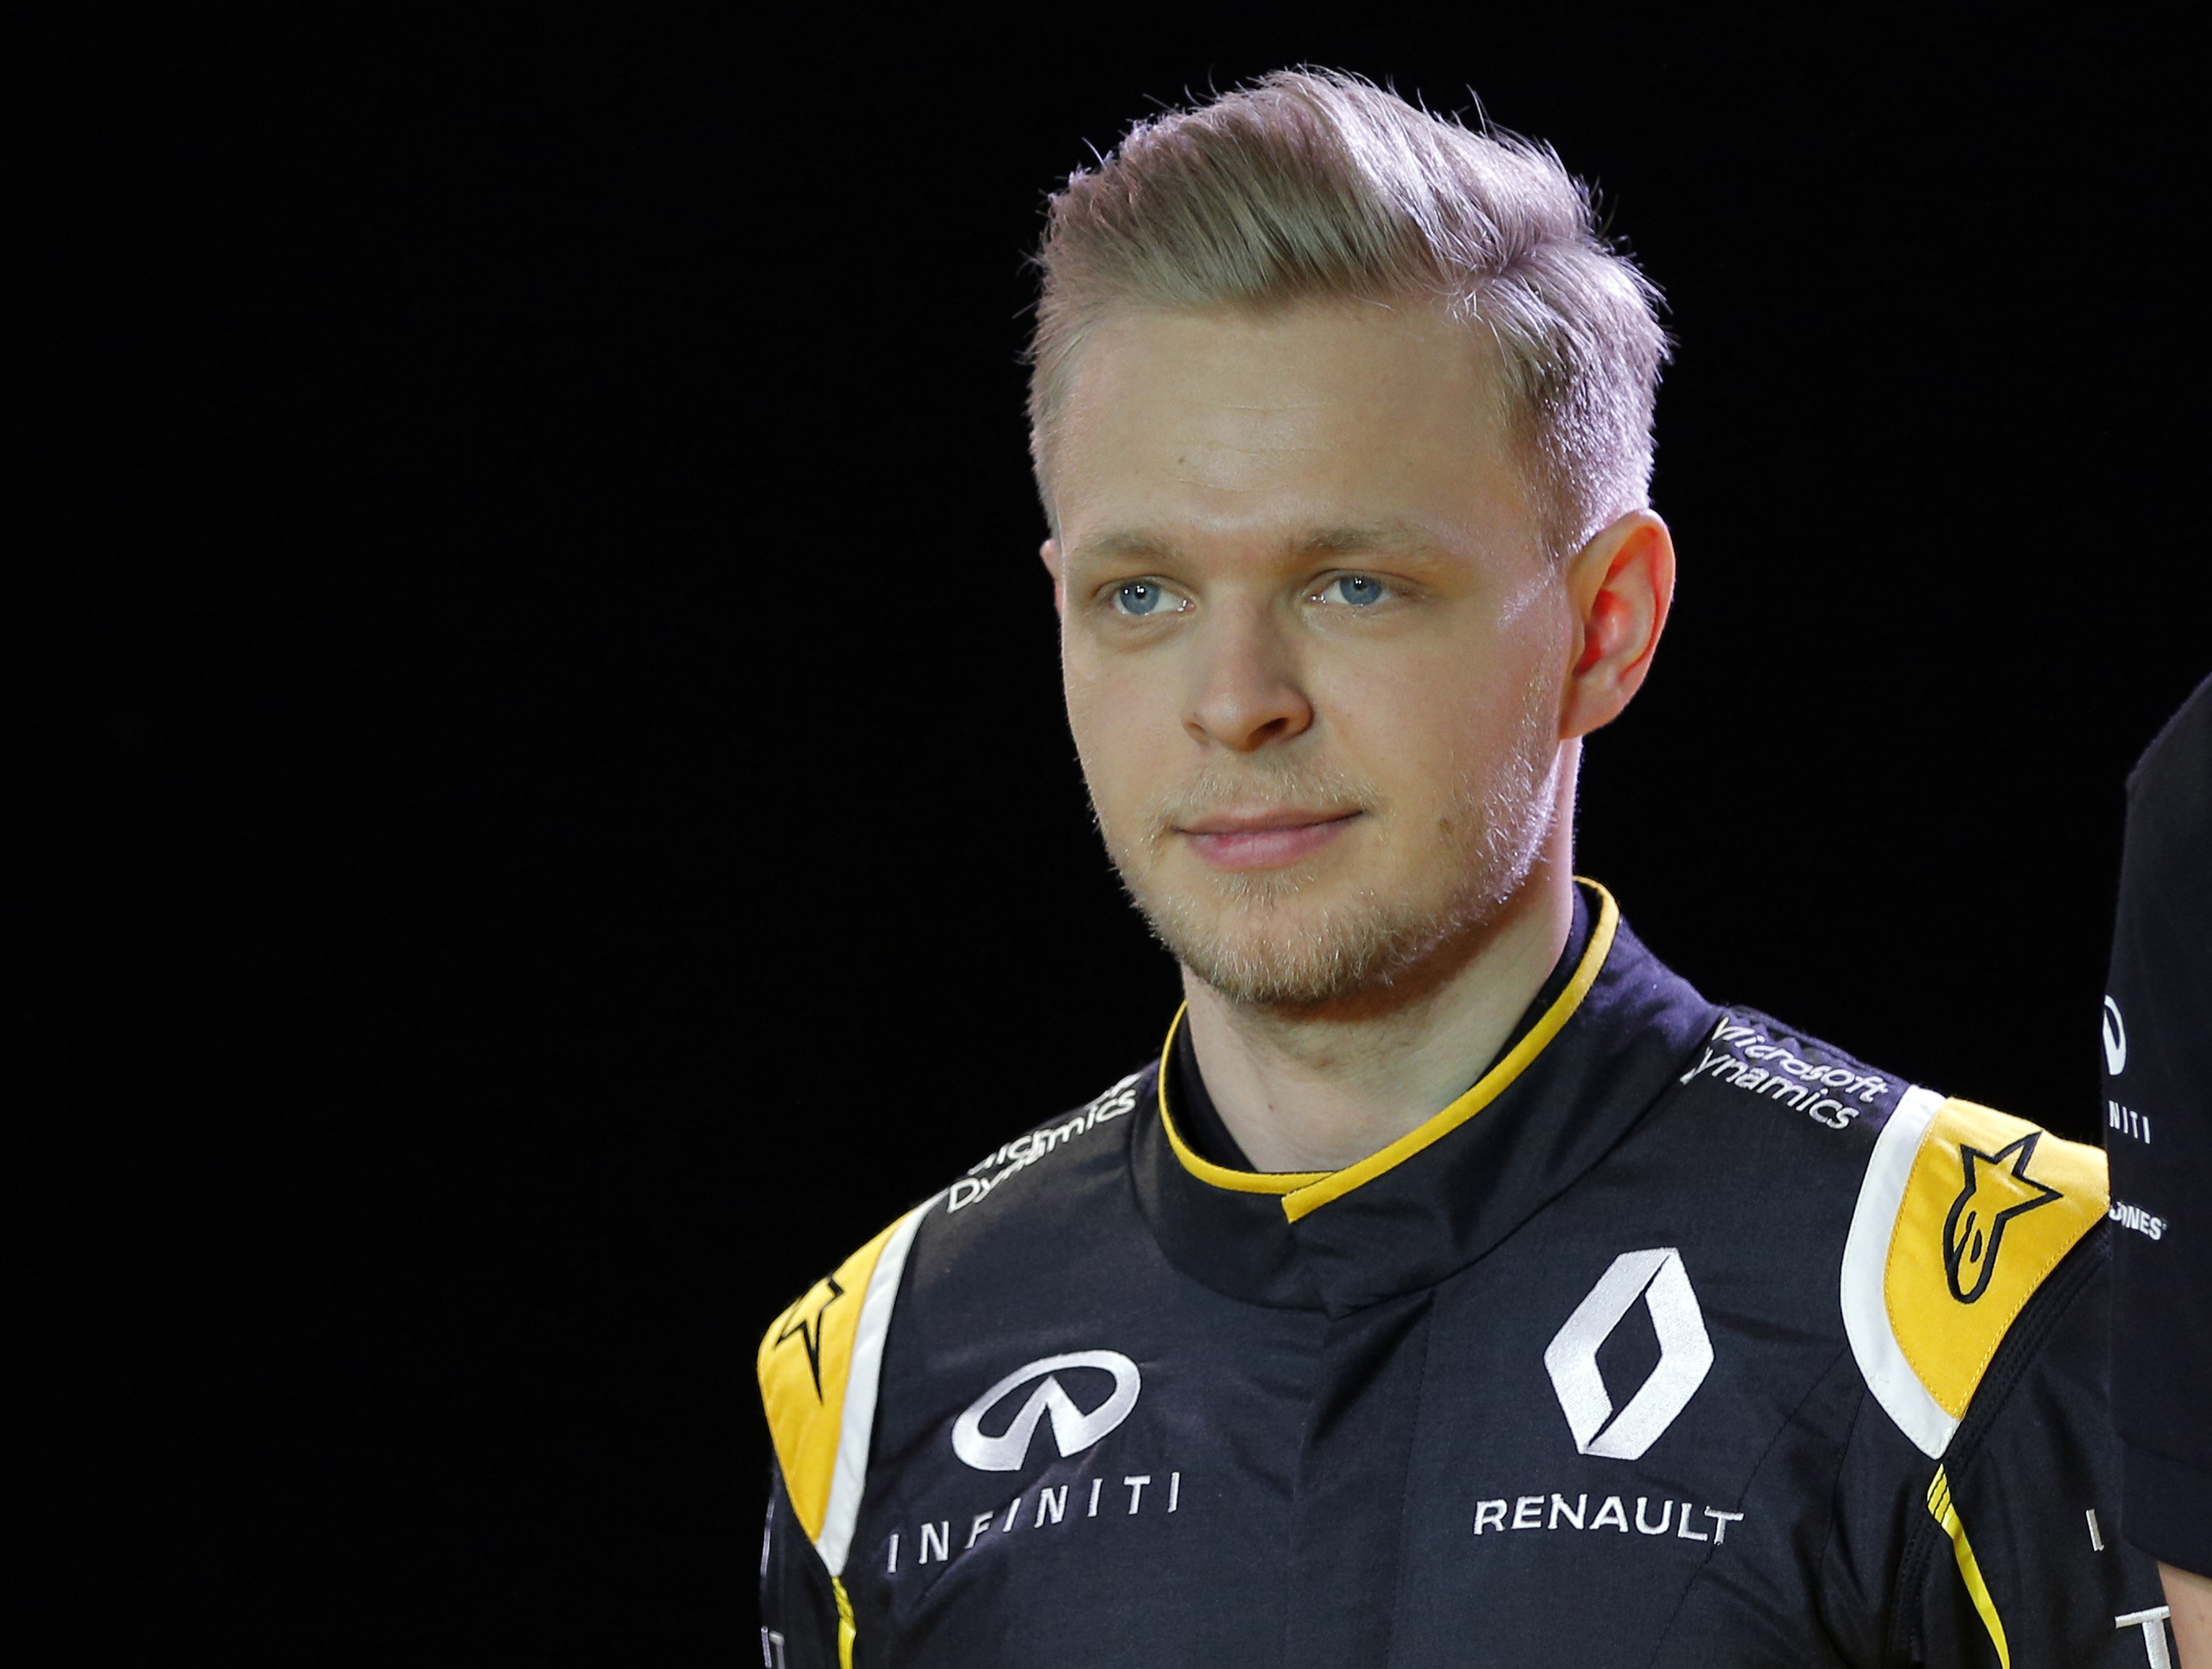 K. Magnussen: Η Renault έσωσε την καριέρα μου στην F1